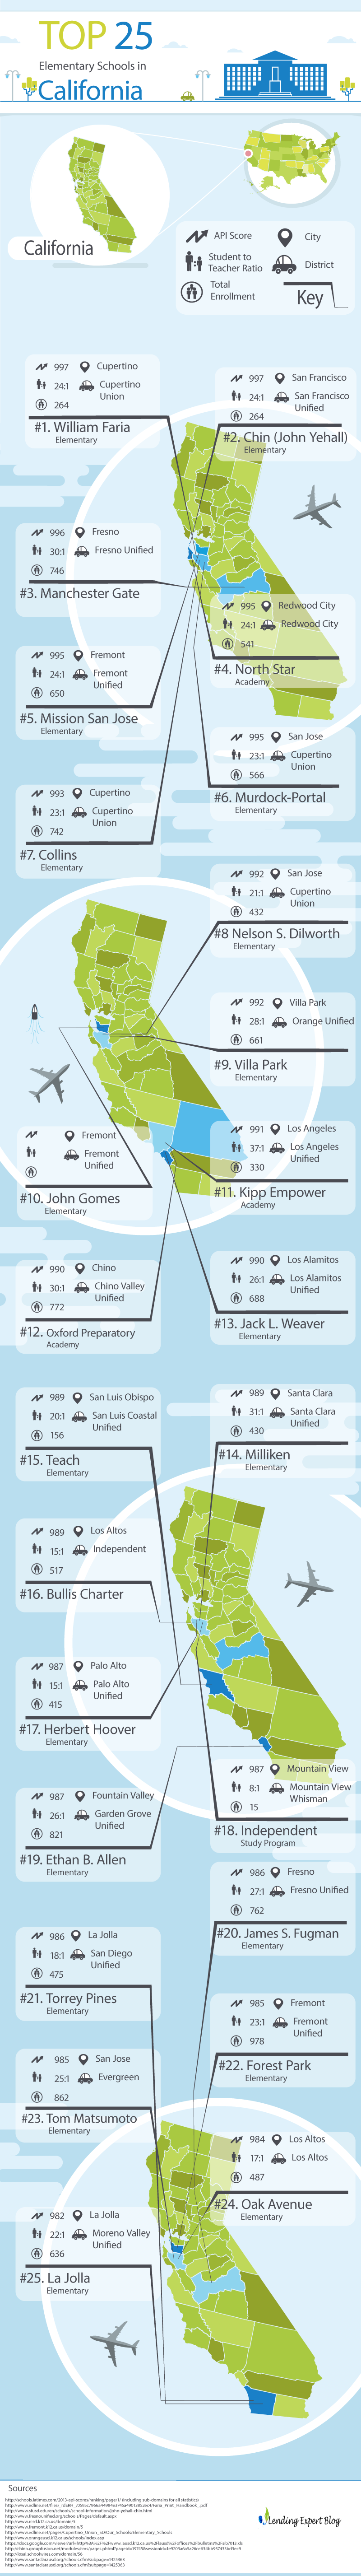 top-25-elementary-schools-in-california-infographic